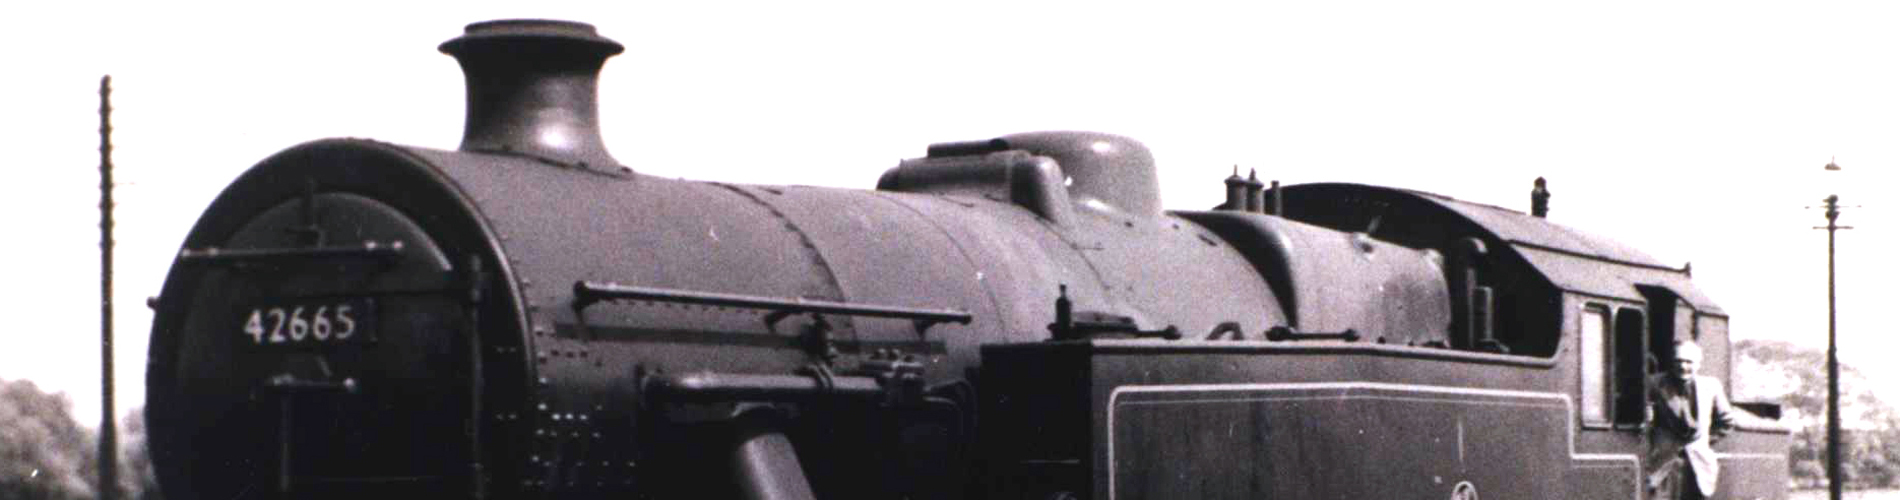 Railway Engine 42665 (5D)